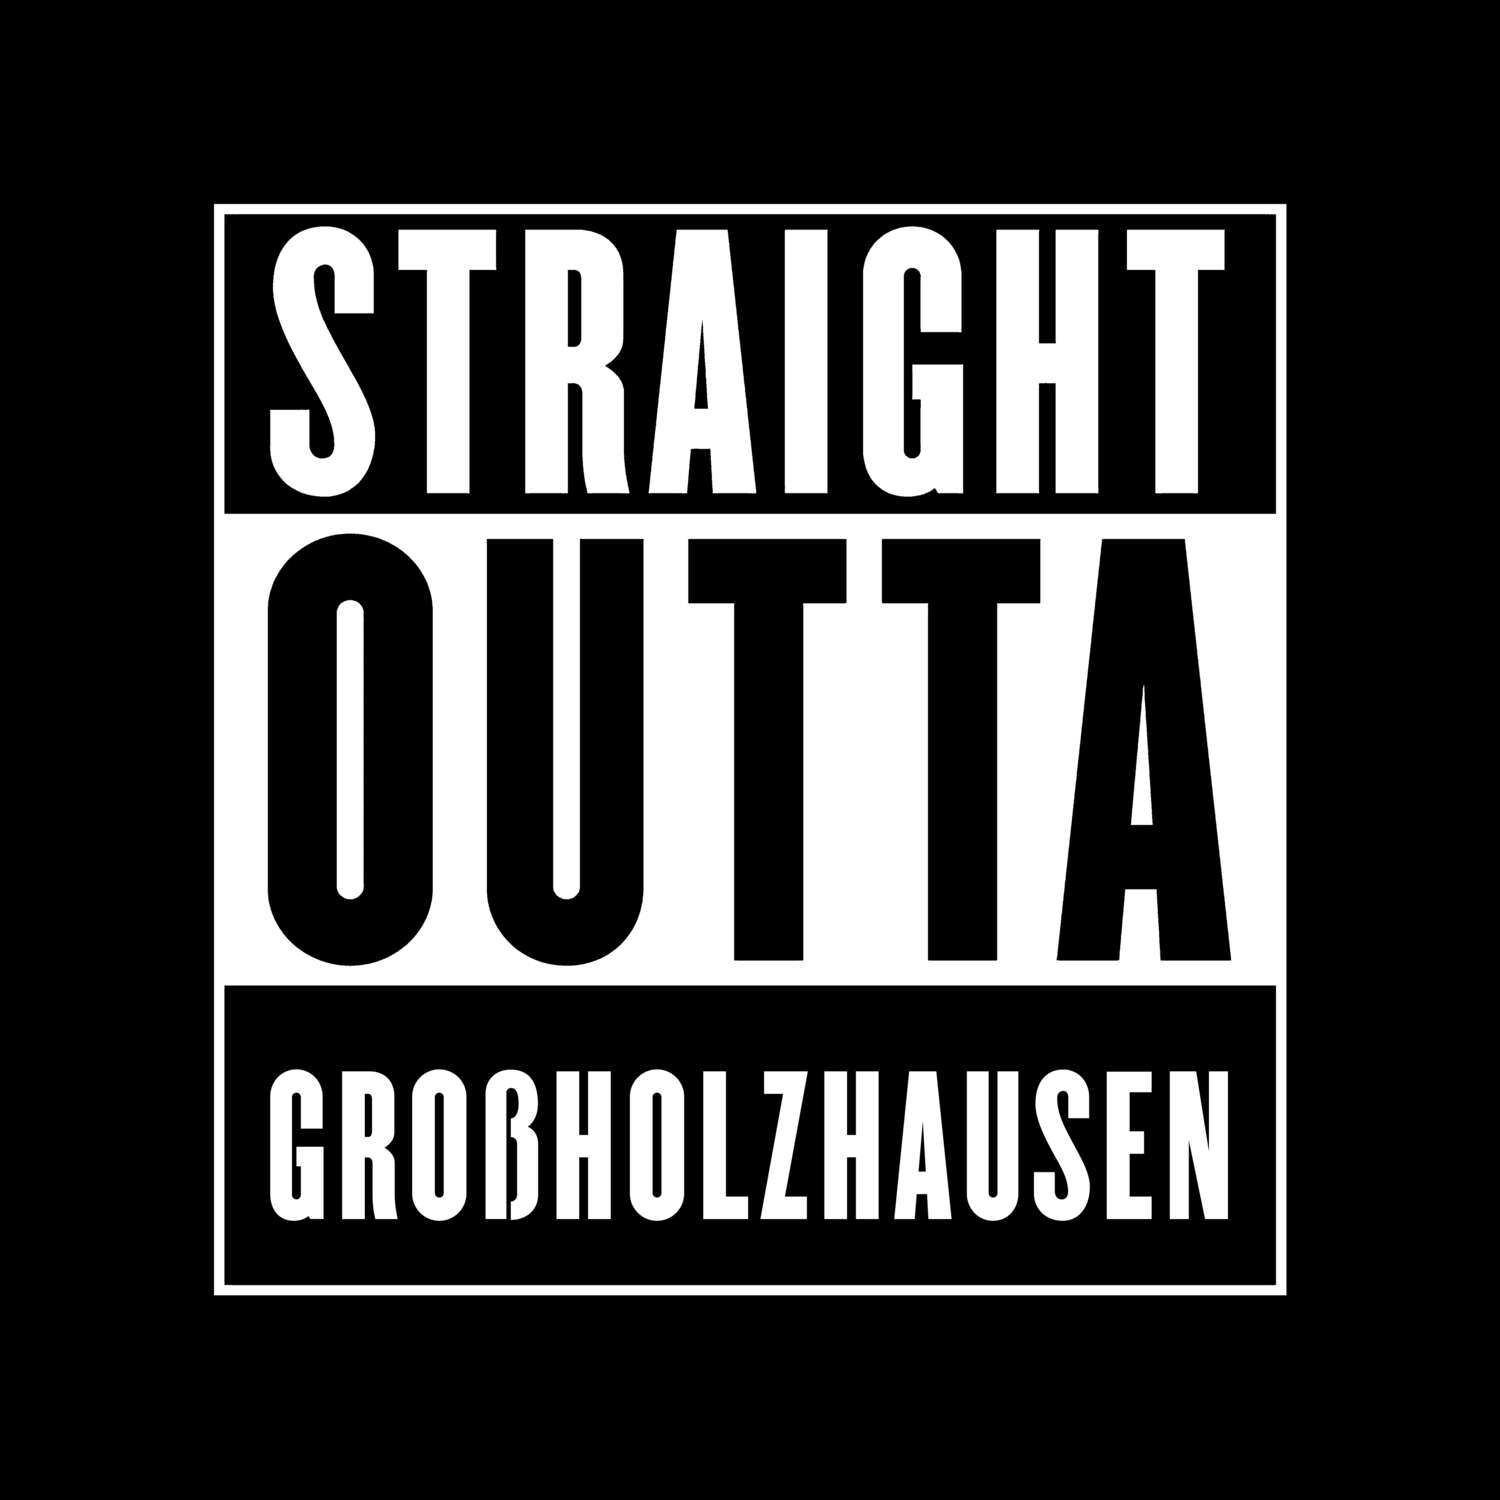 Großholzhausen T-Shirt »Straight Outta«